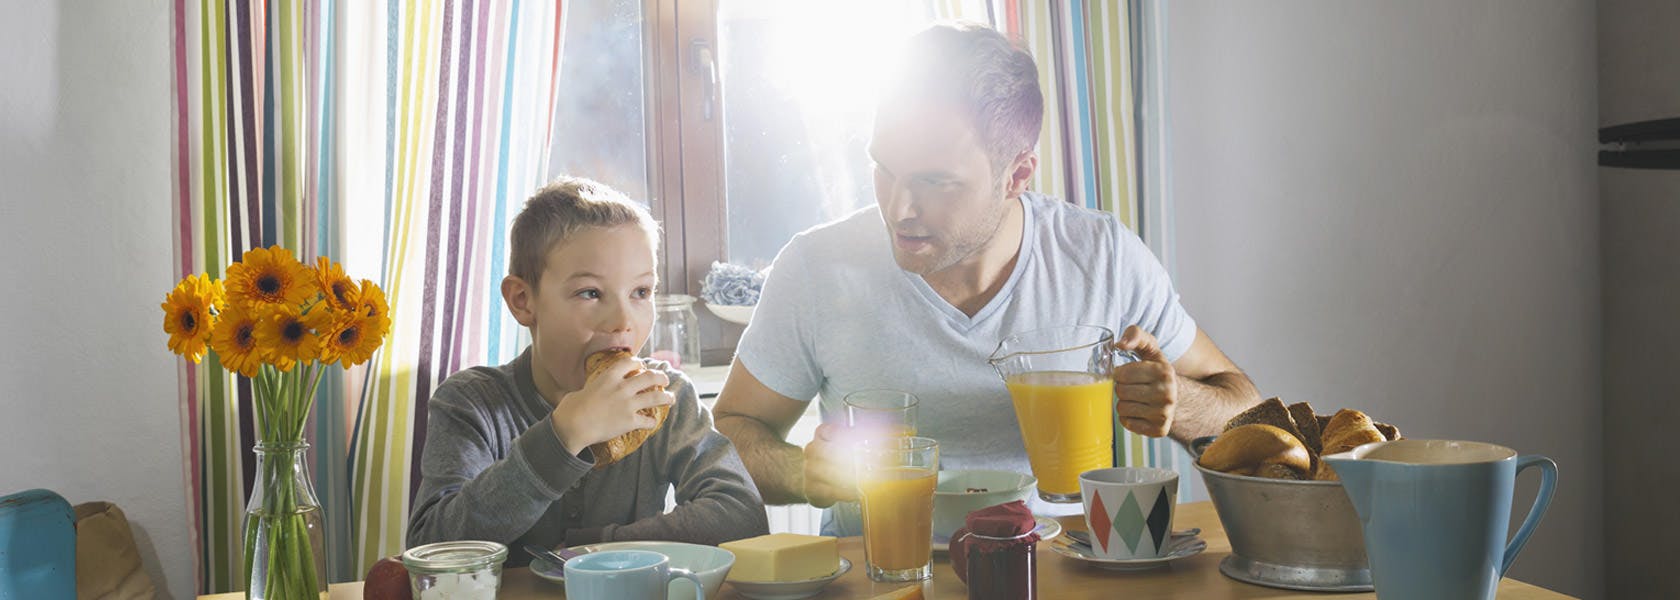 Familie spiser en sund morgenmad sammen 